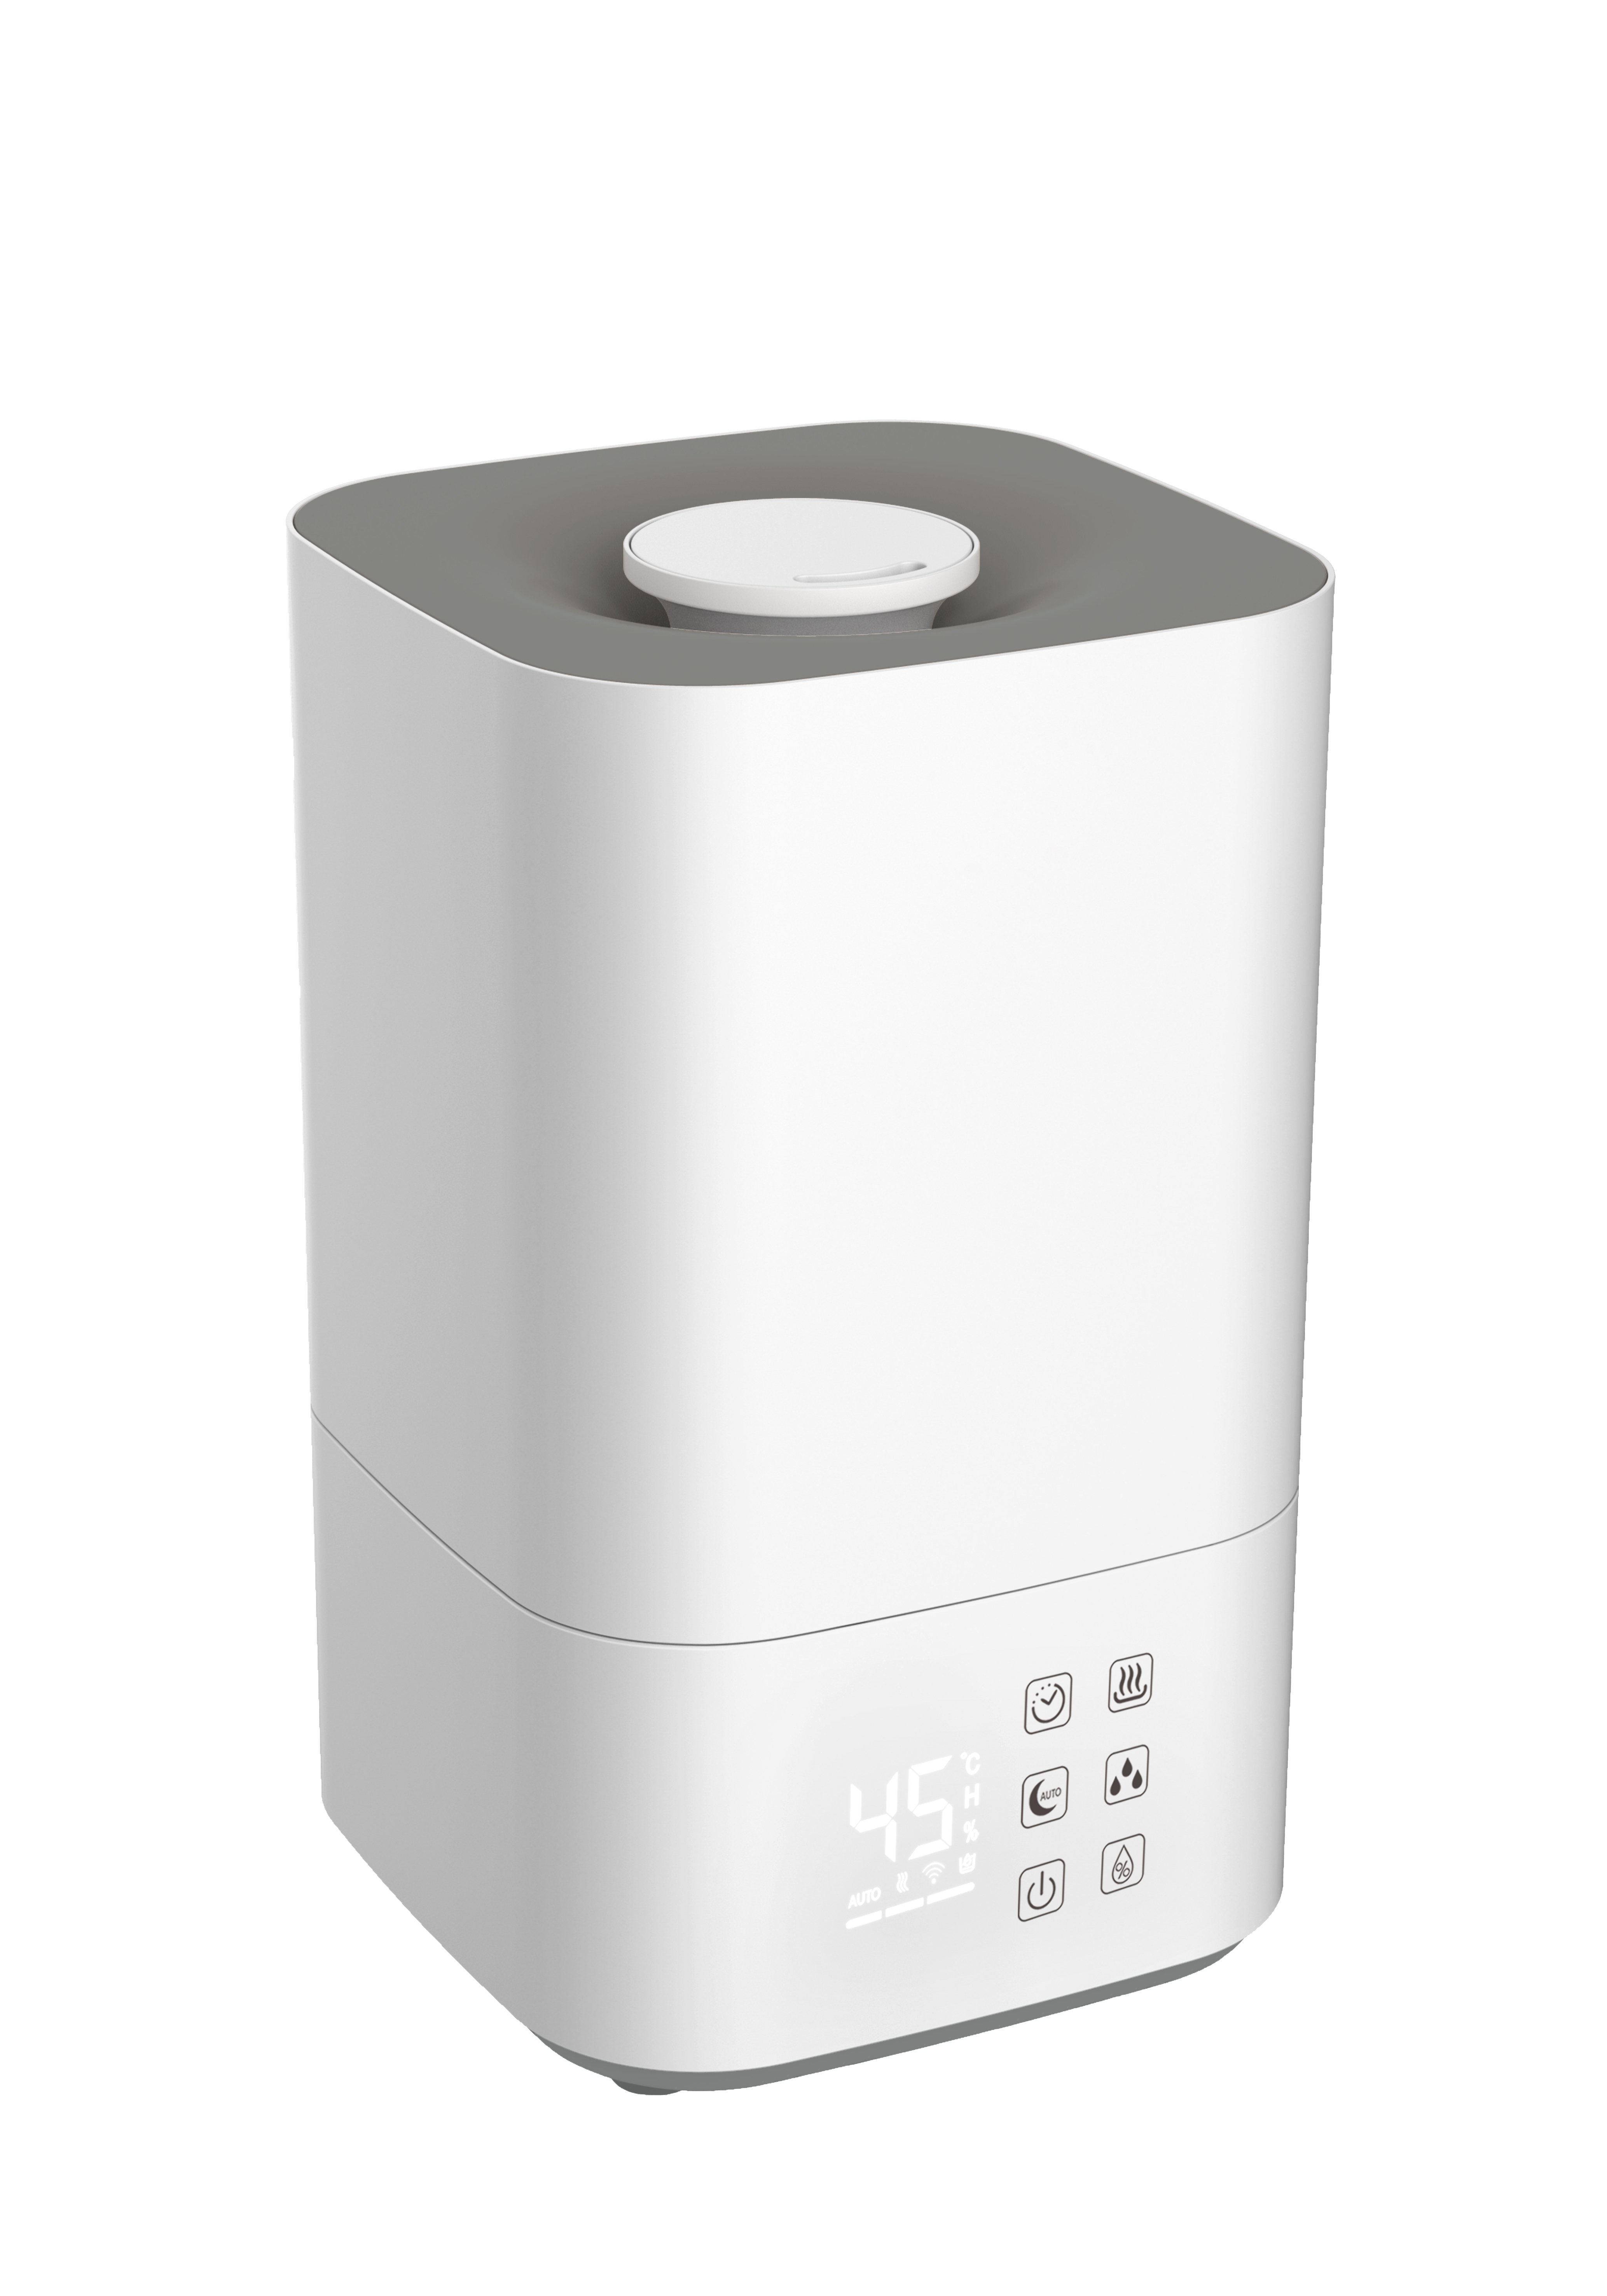 Luftbefeuchter 50 Watt, Weiß/Grau m²) (105 BCLB705IKHF01 SHE Raumgröße: